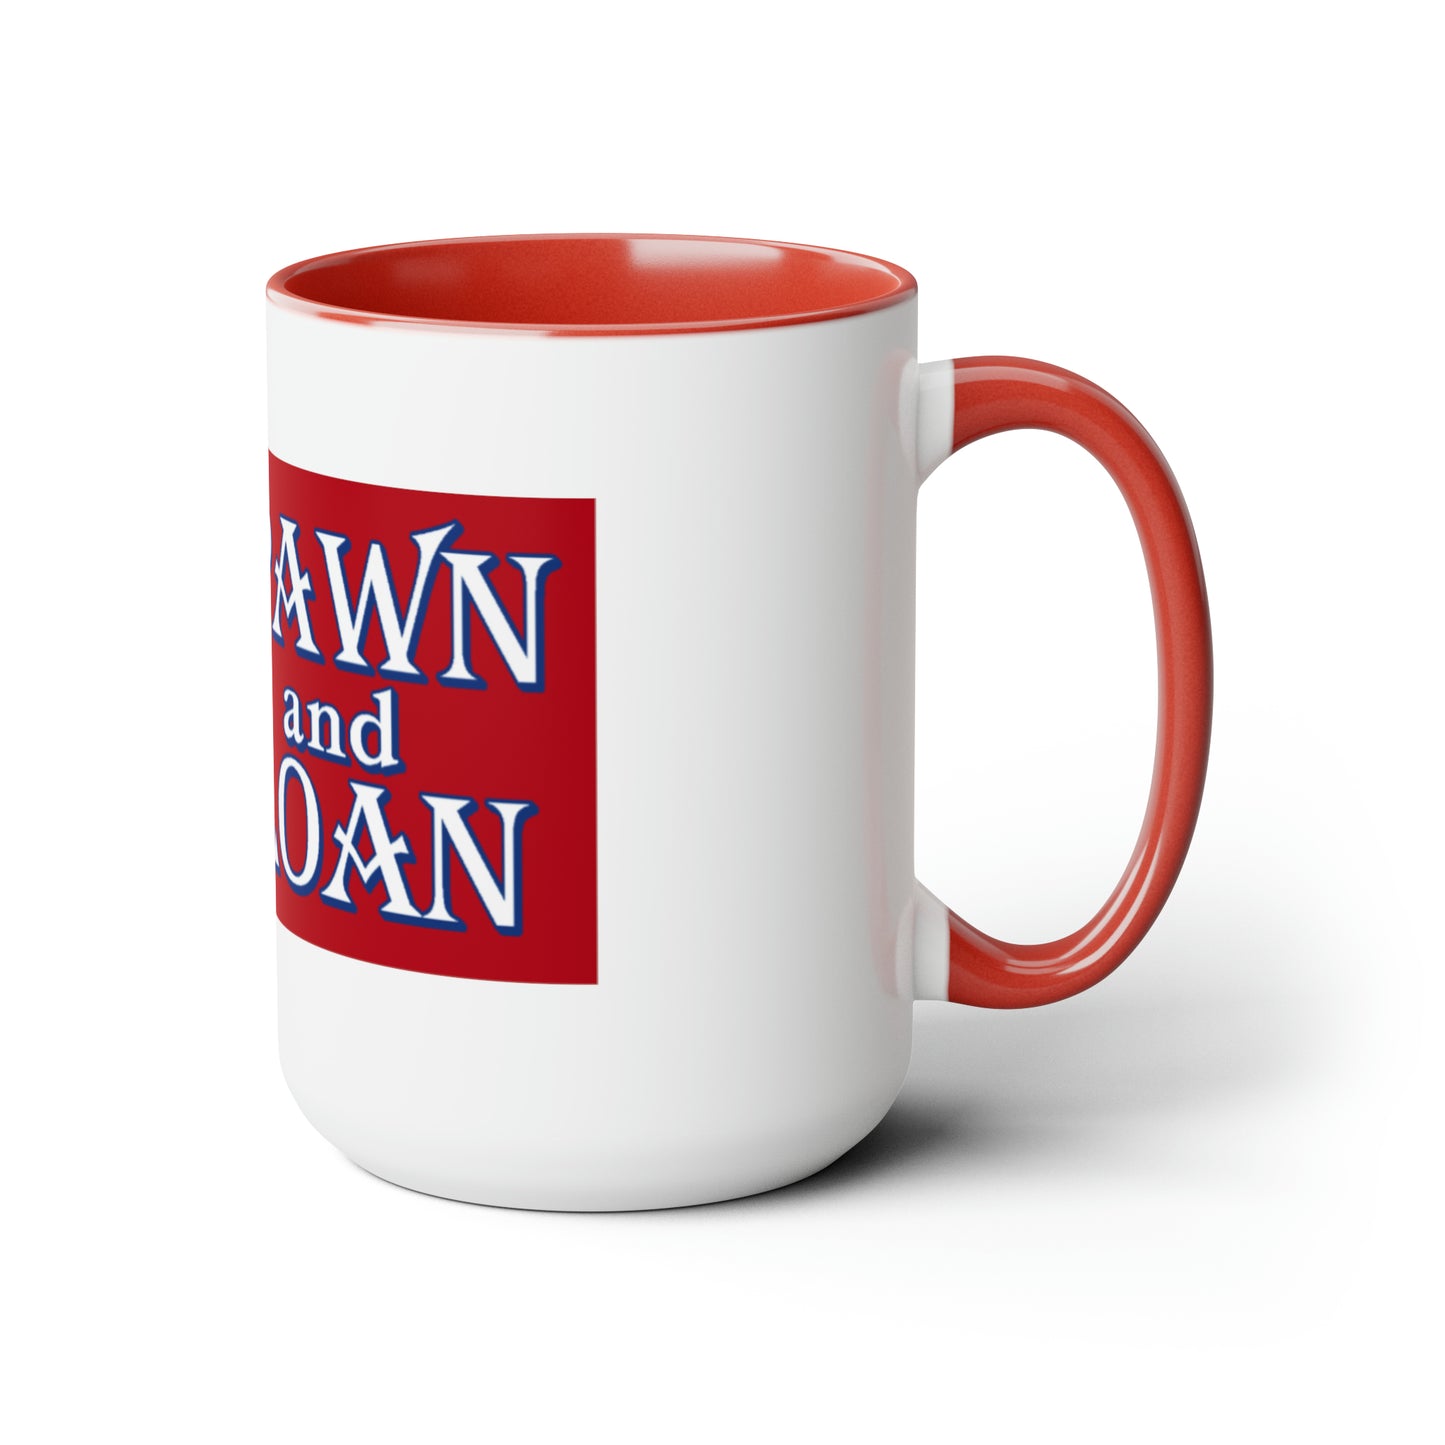 Two-Tone Coffee Mugs, 15oz | US Pawn and Loan